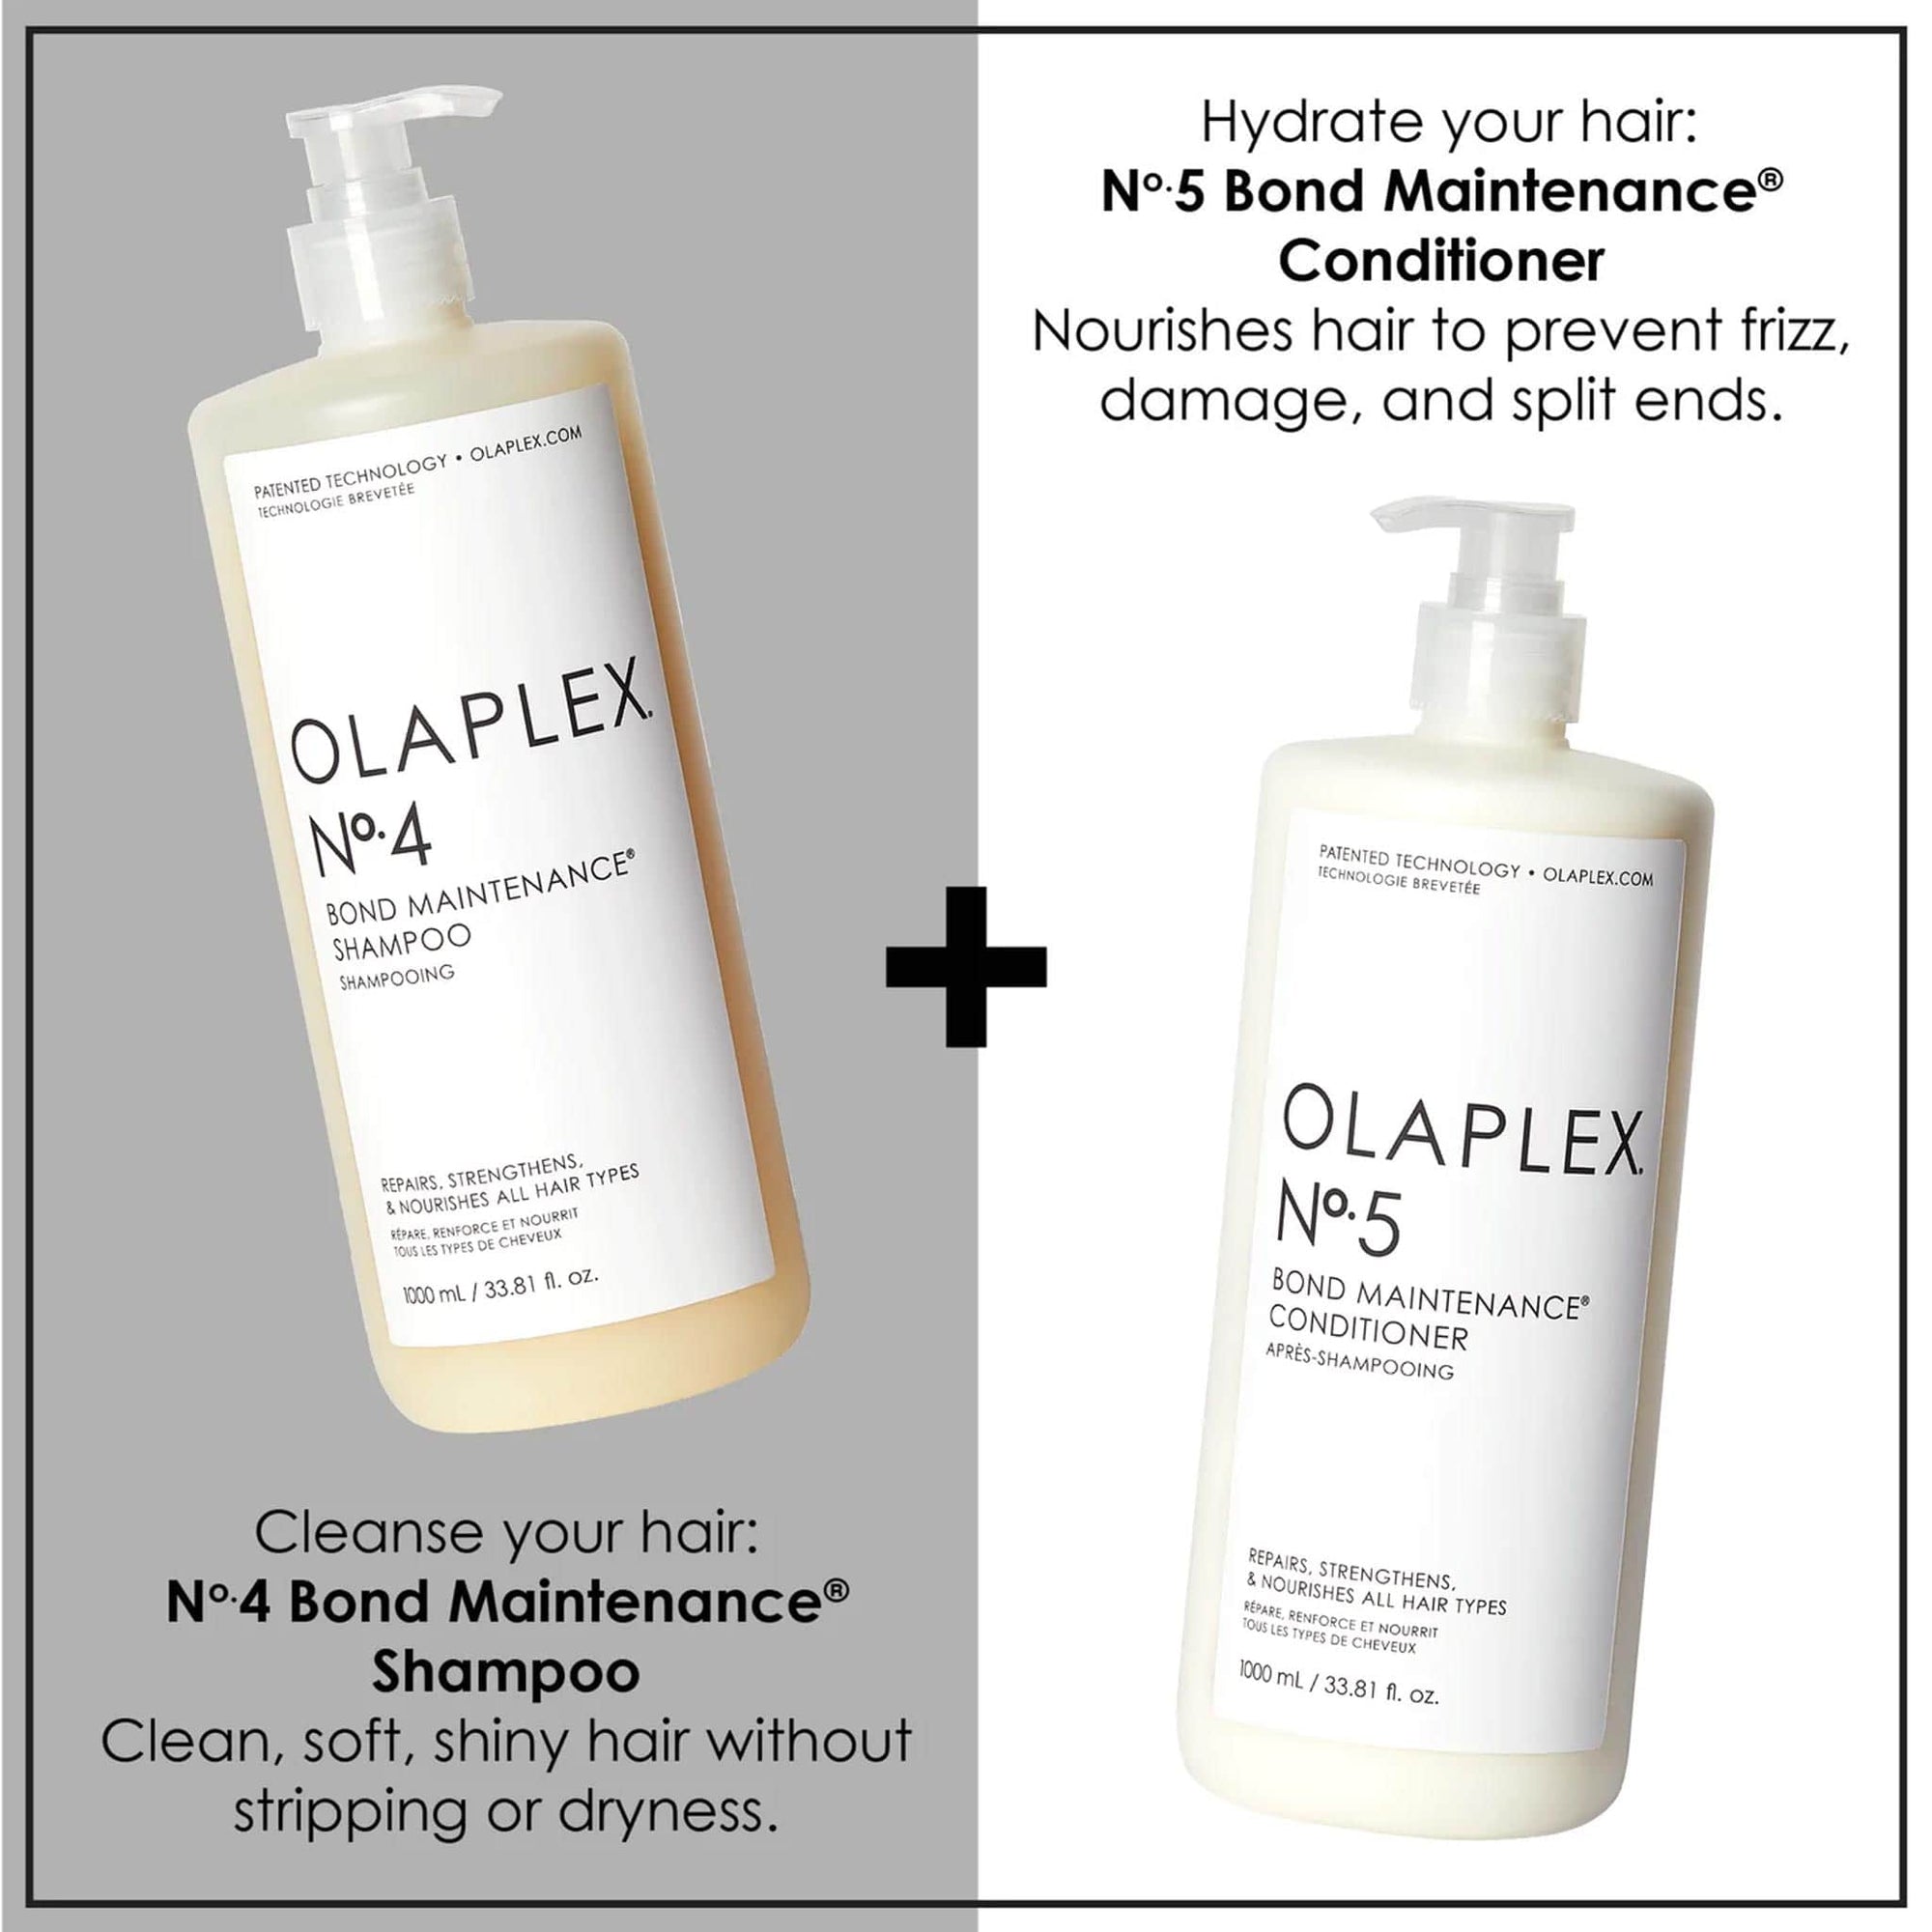 Olaplex No.4 Shampoo - Shop Online | Retail Box